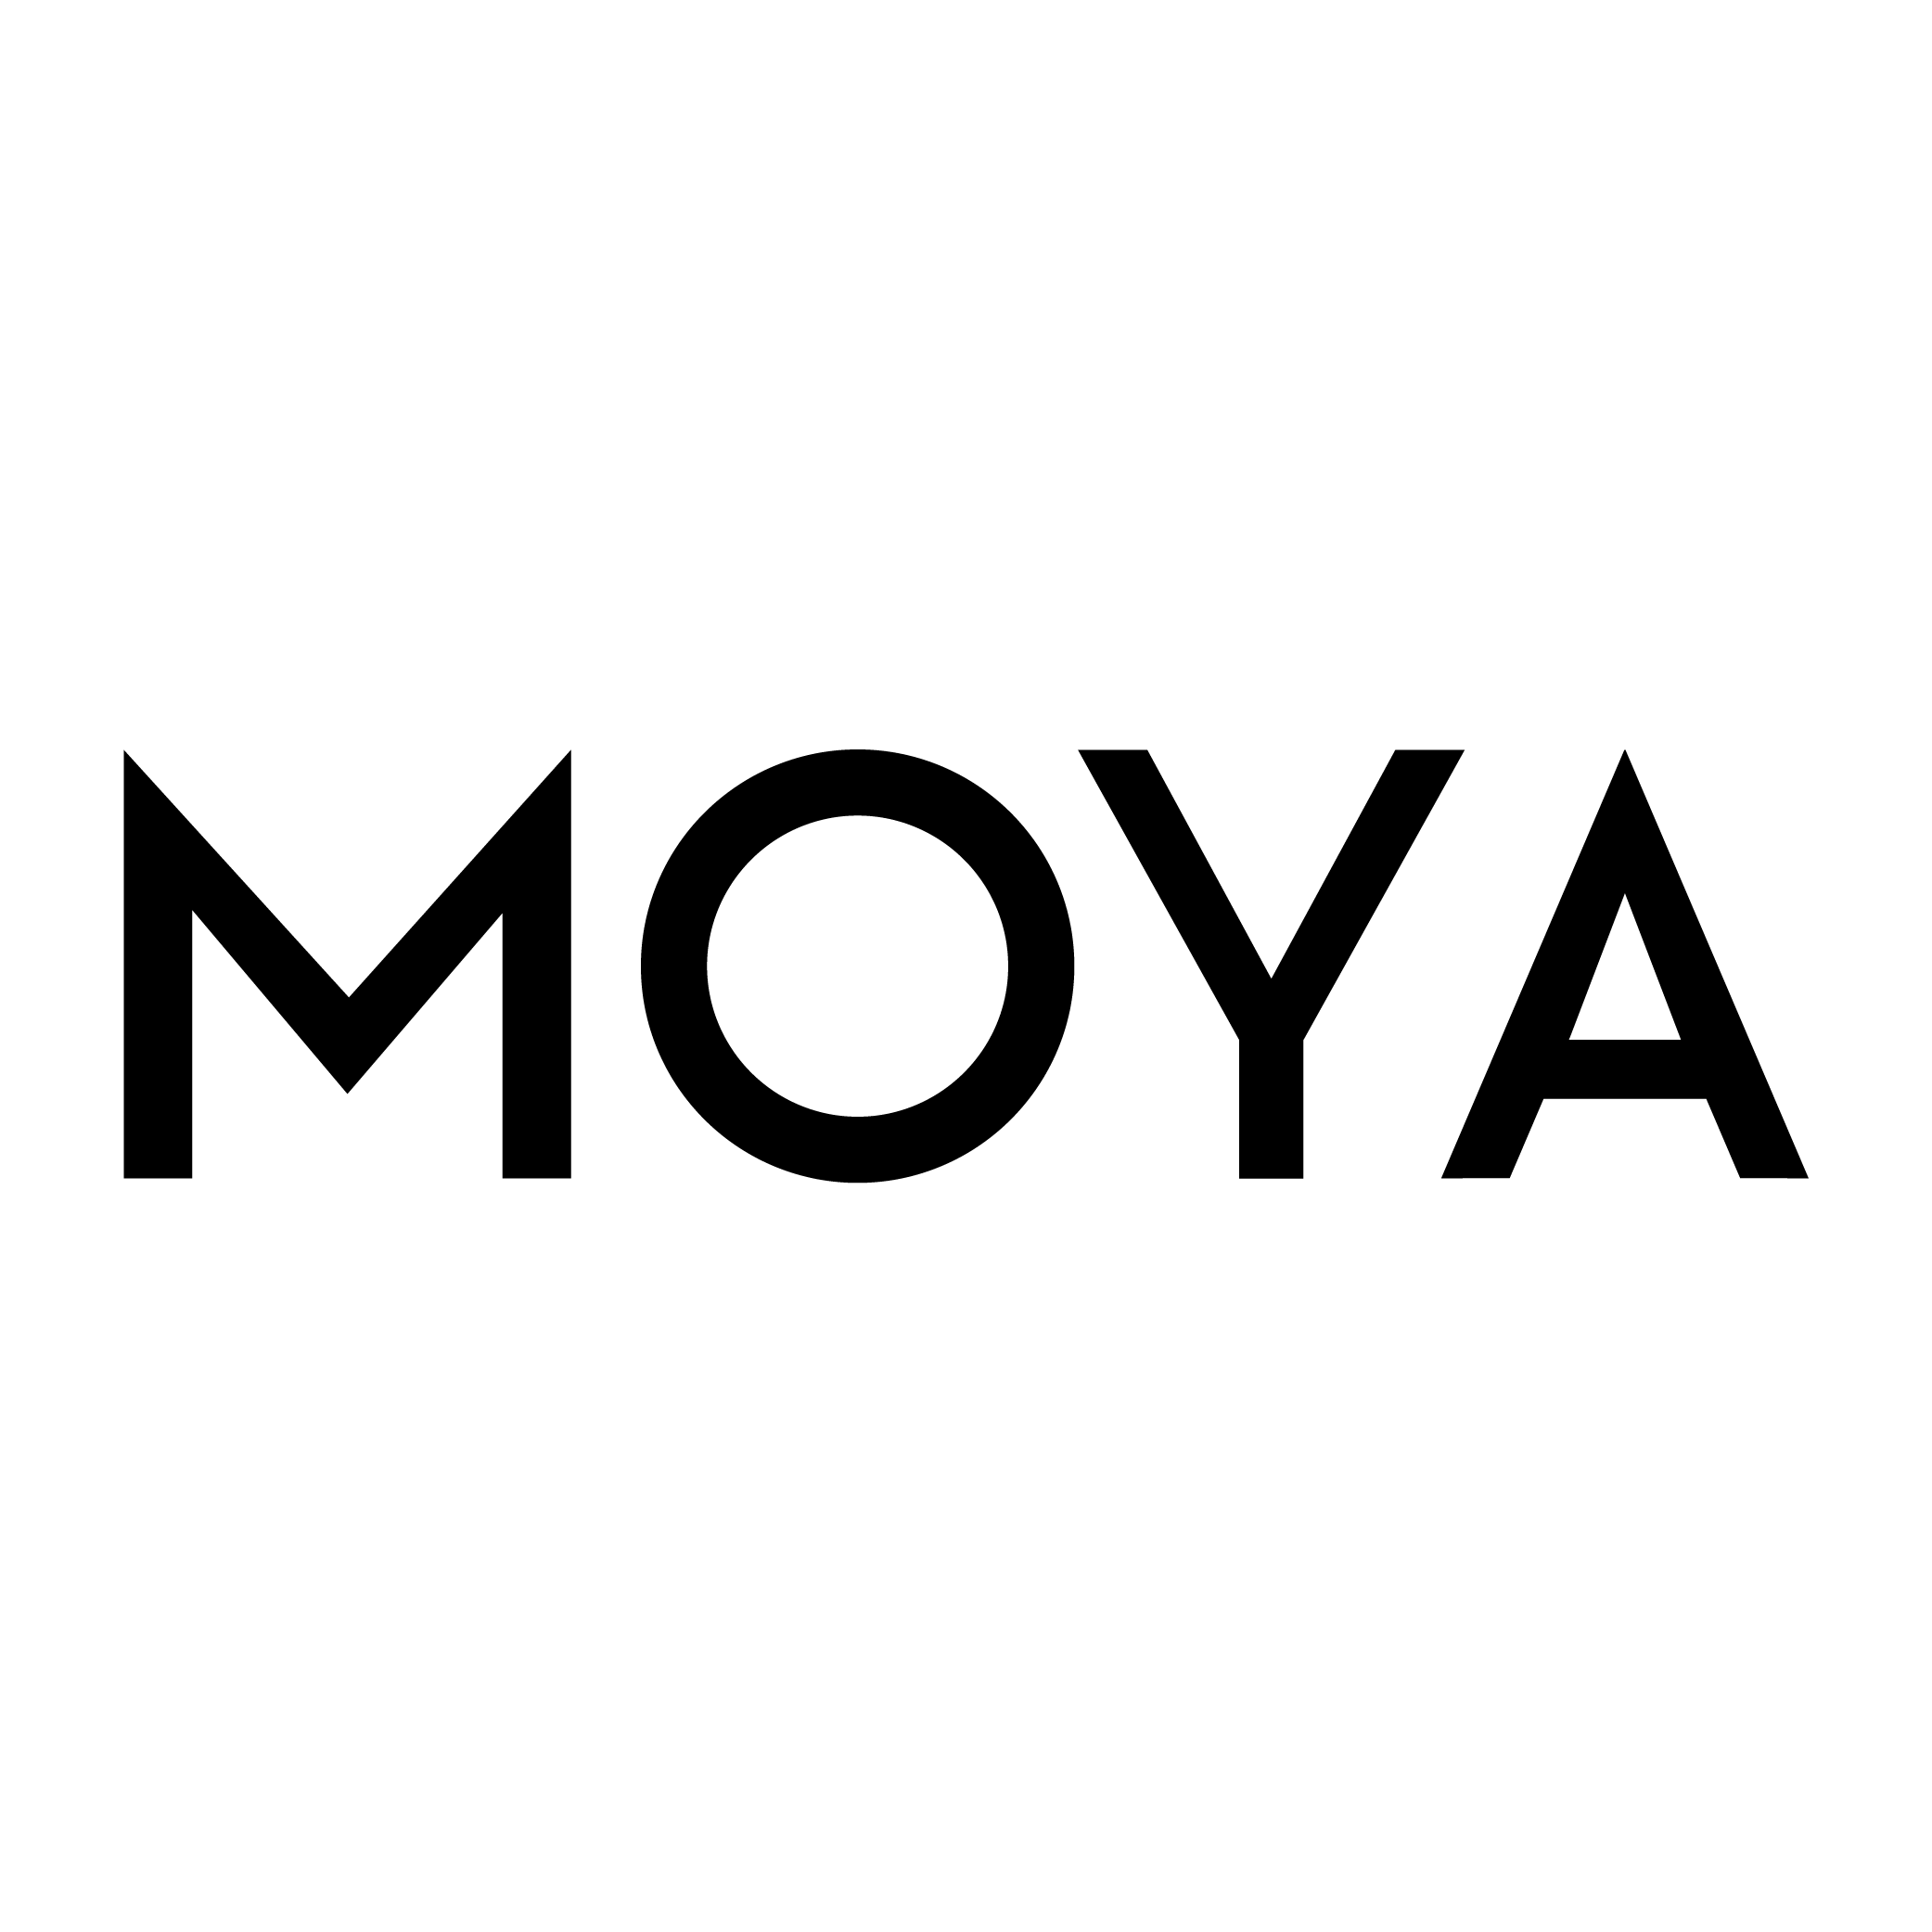 MOYA